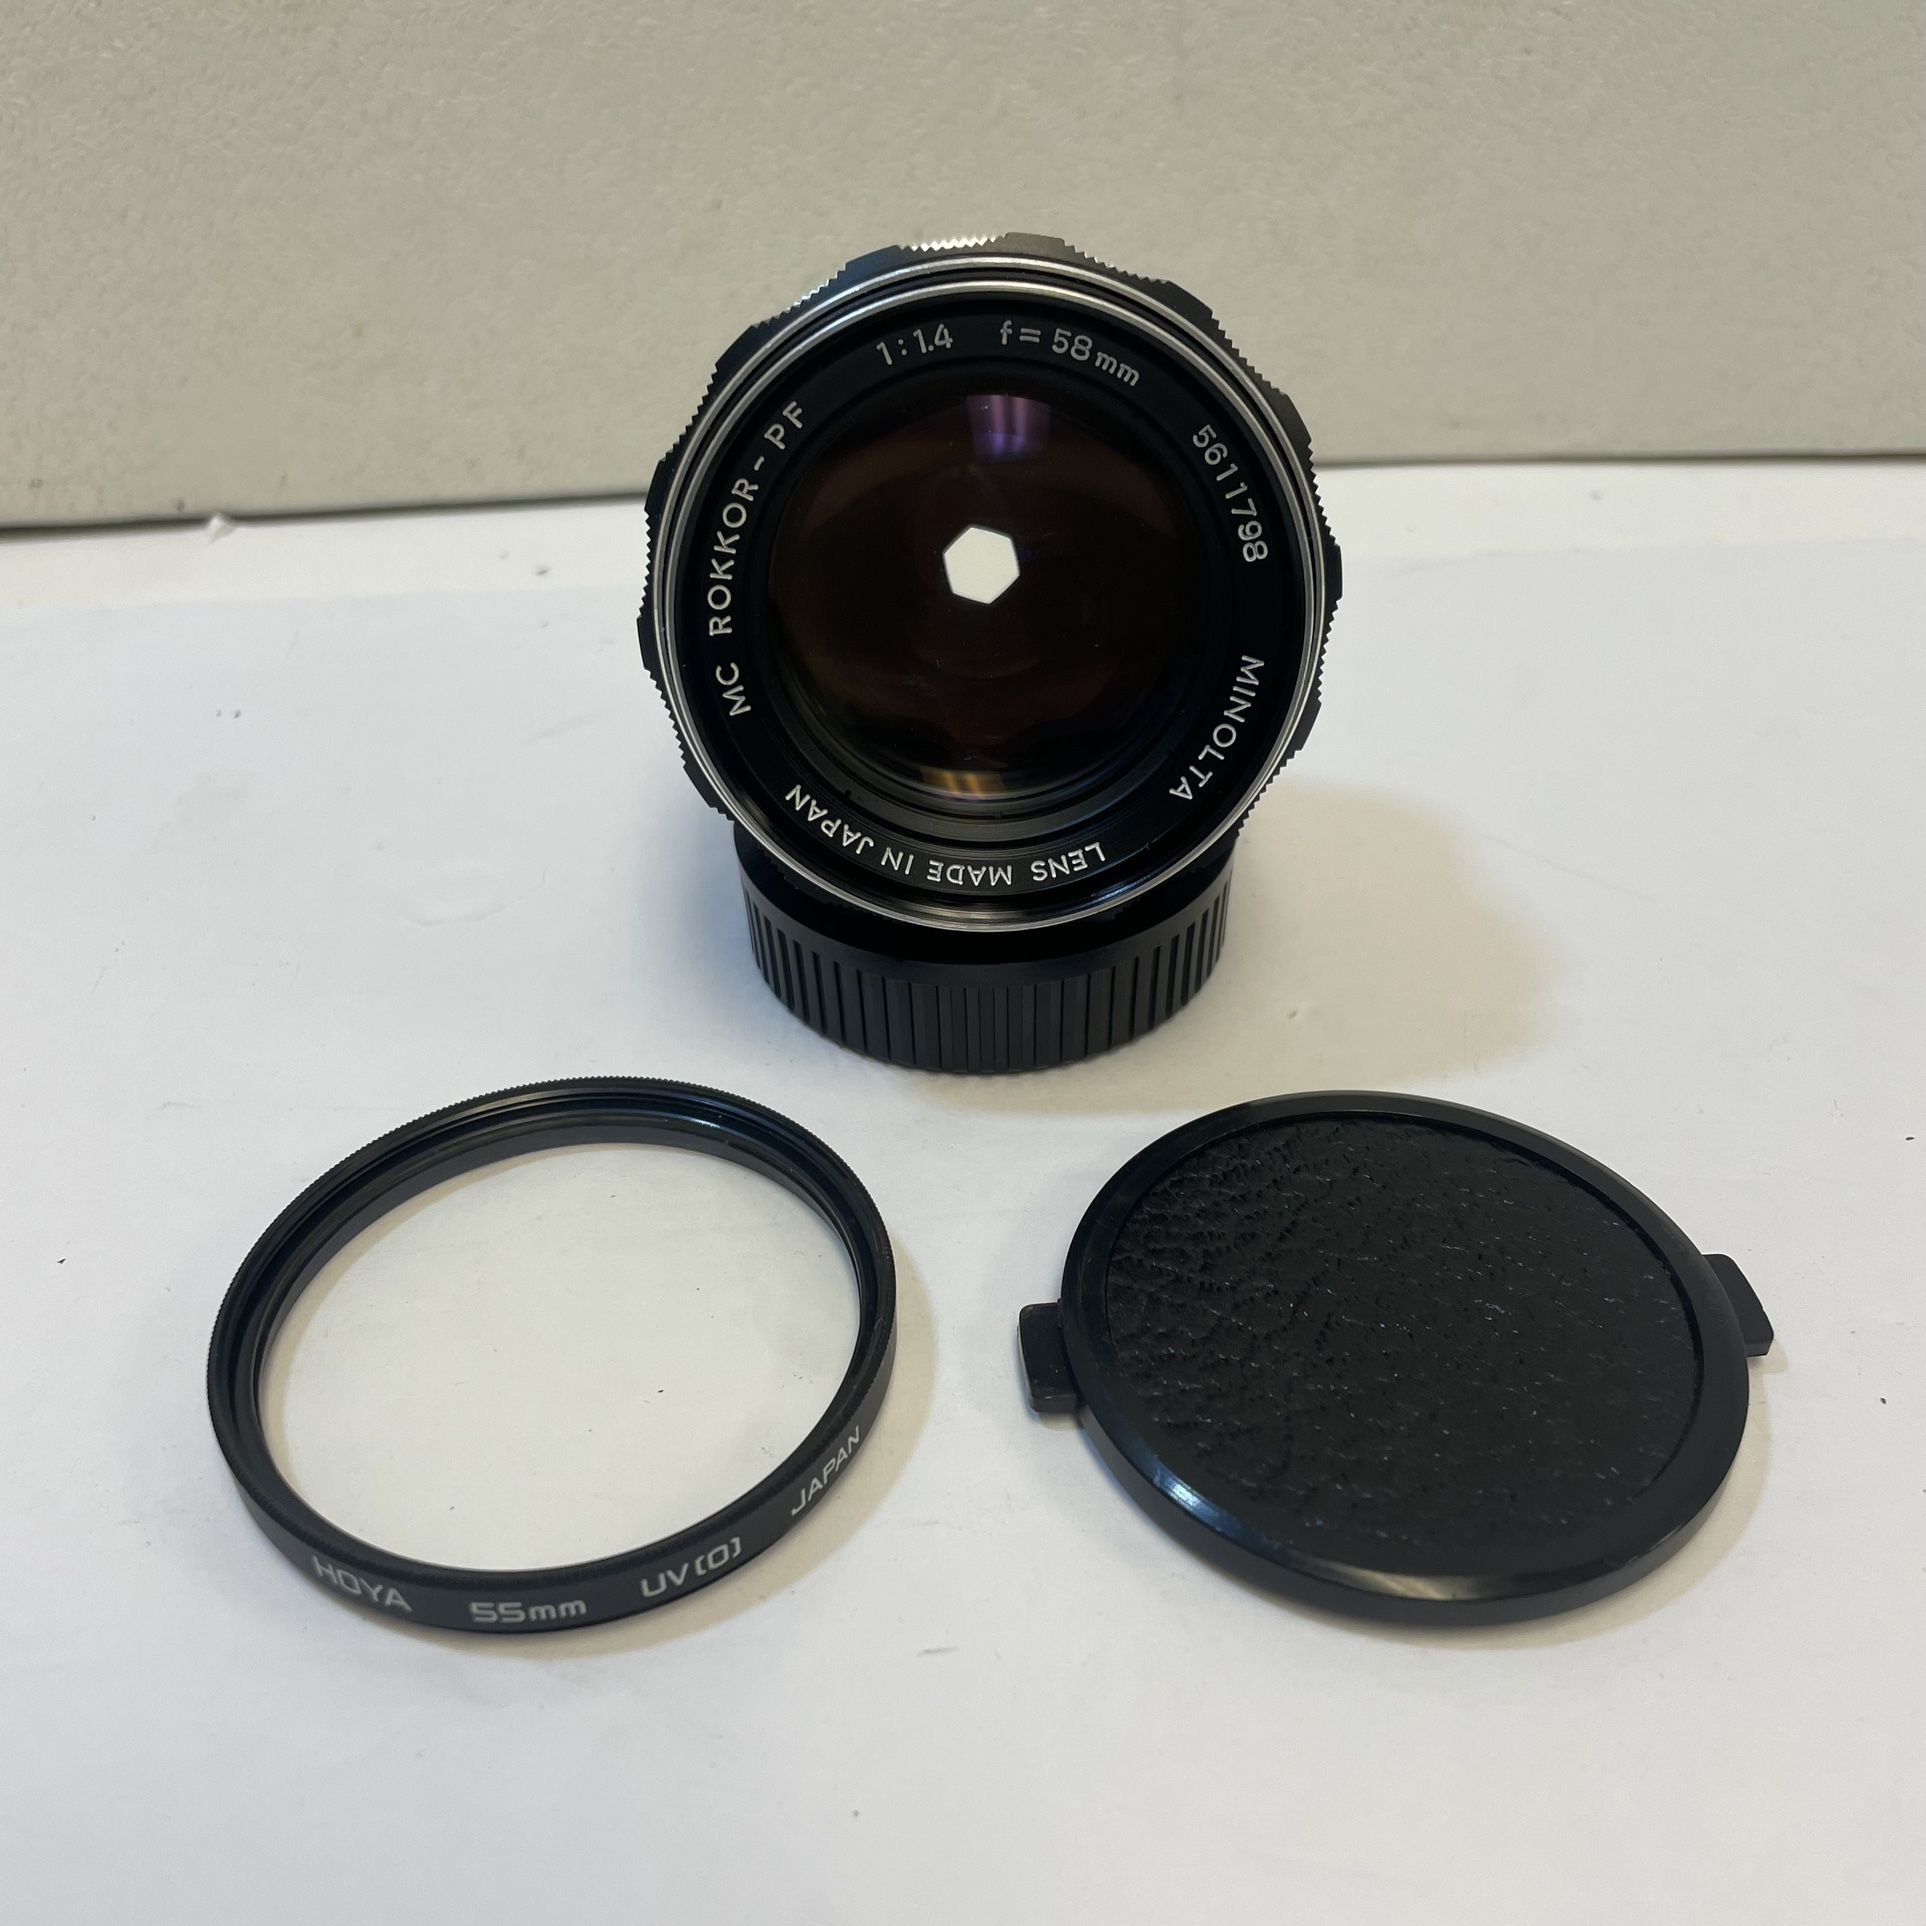 Minolta MC Rokkor-PF 58mm f1.4 Prime Film Camera Lens with Caps - Tested